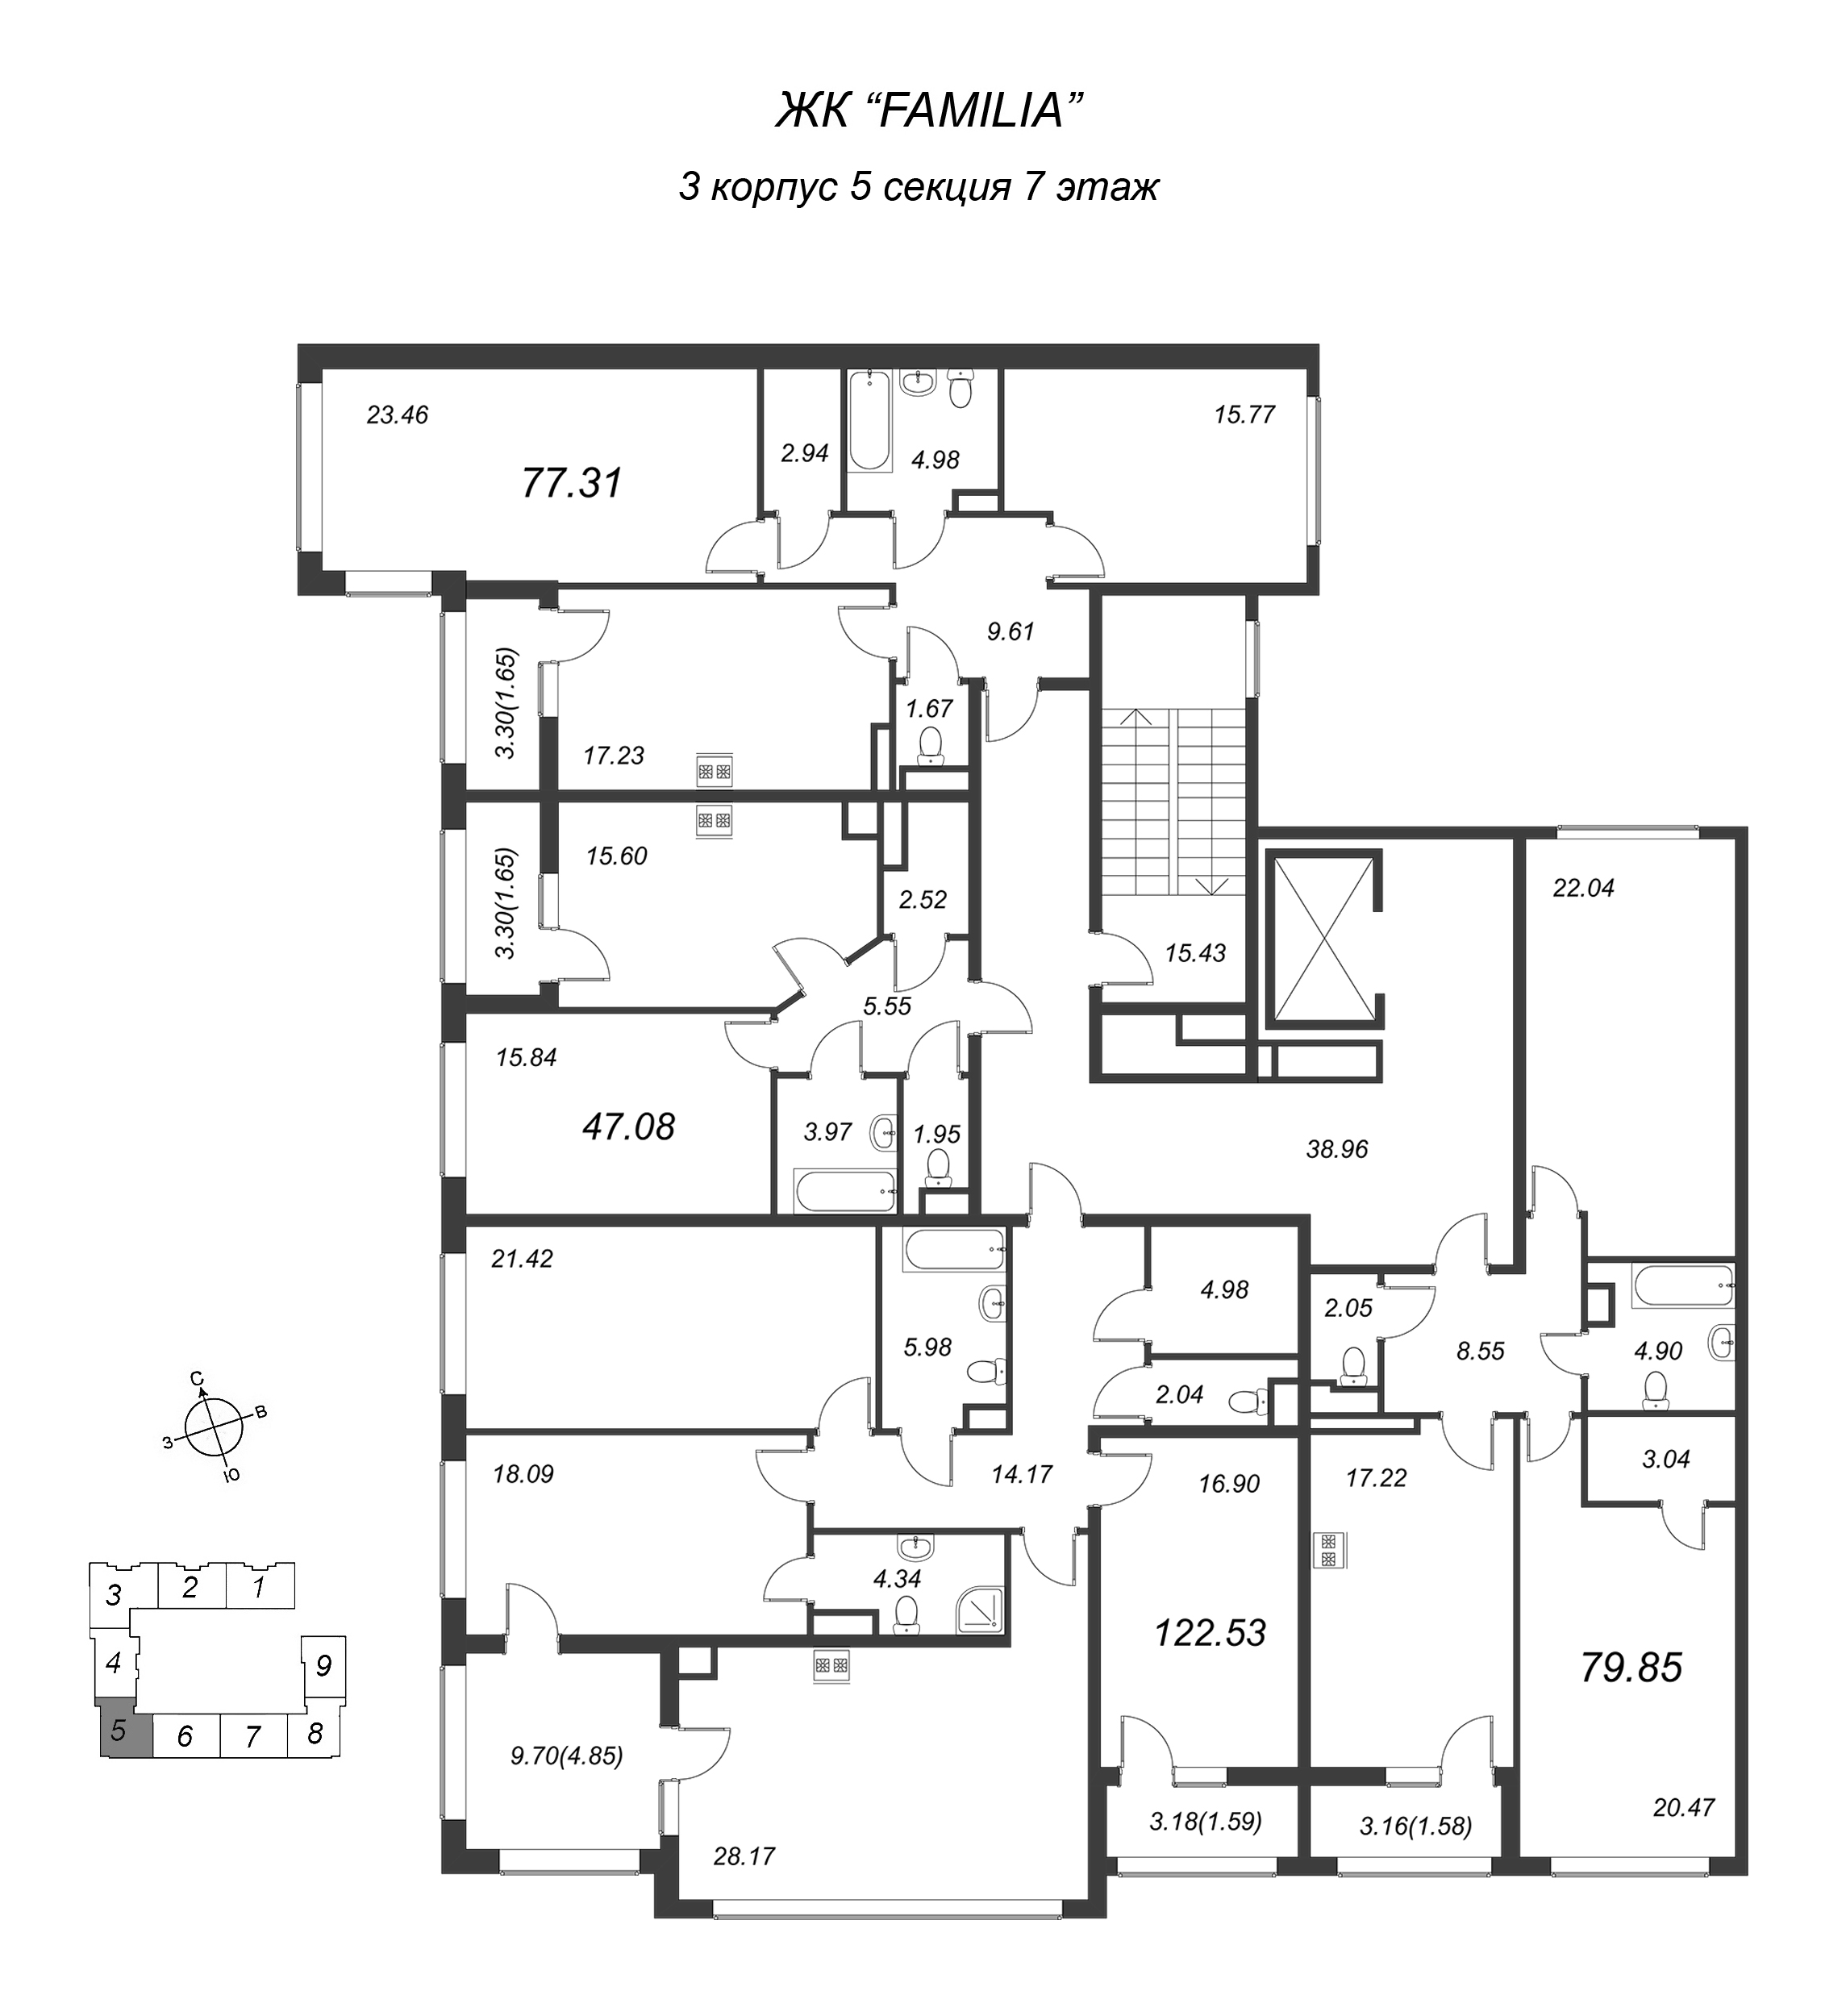 3-комнатная (Евро) квартира, 79.8 м² в ЖК "FAMILIA" - планировка этажа